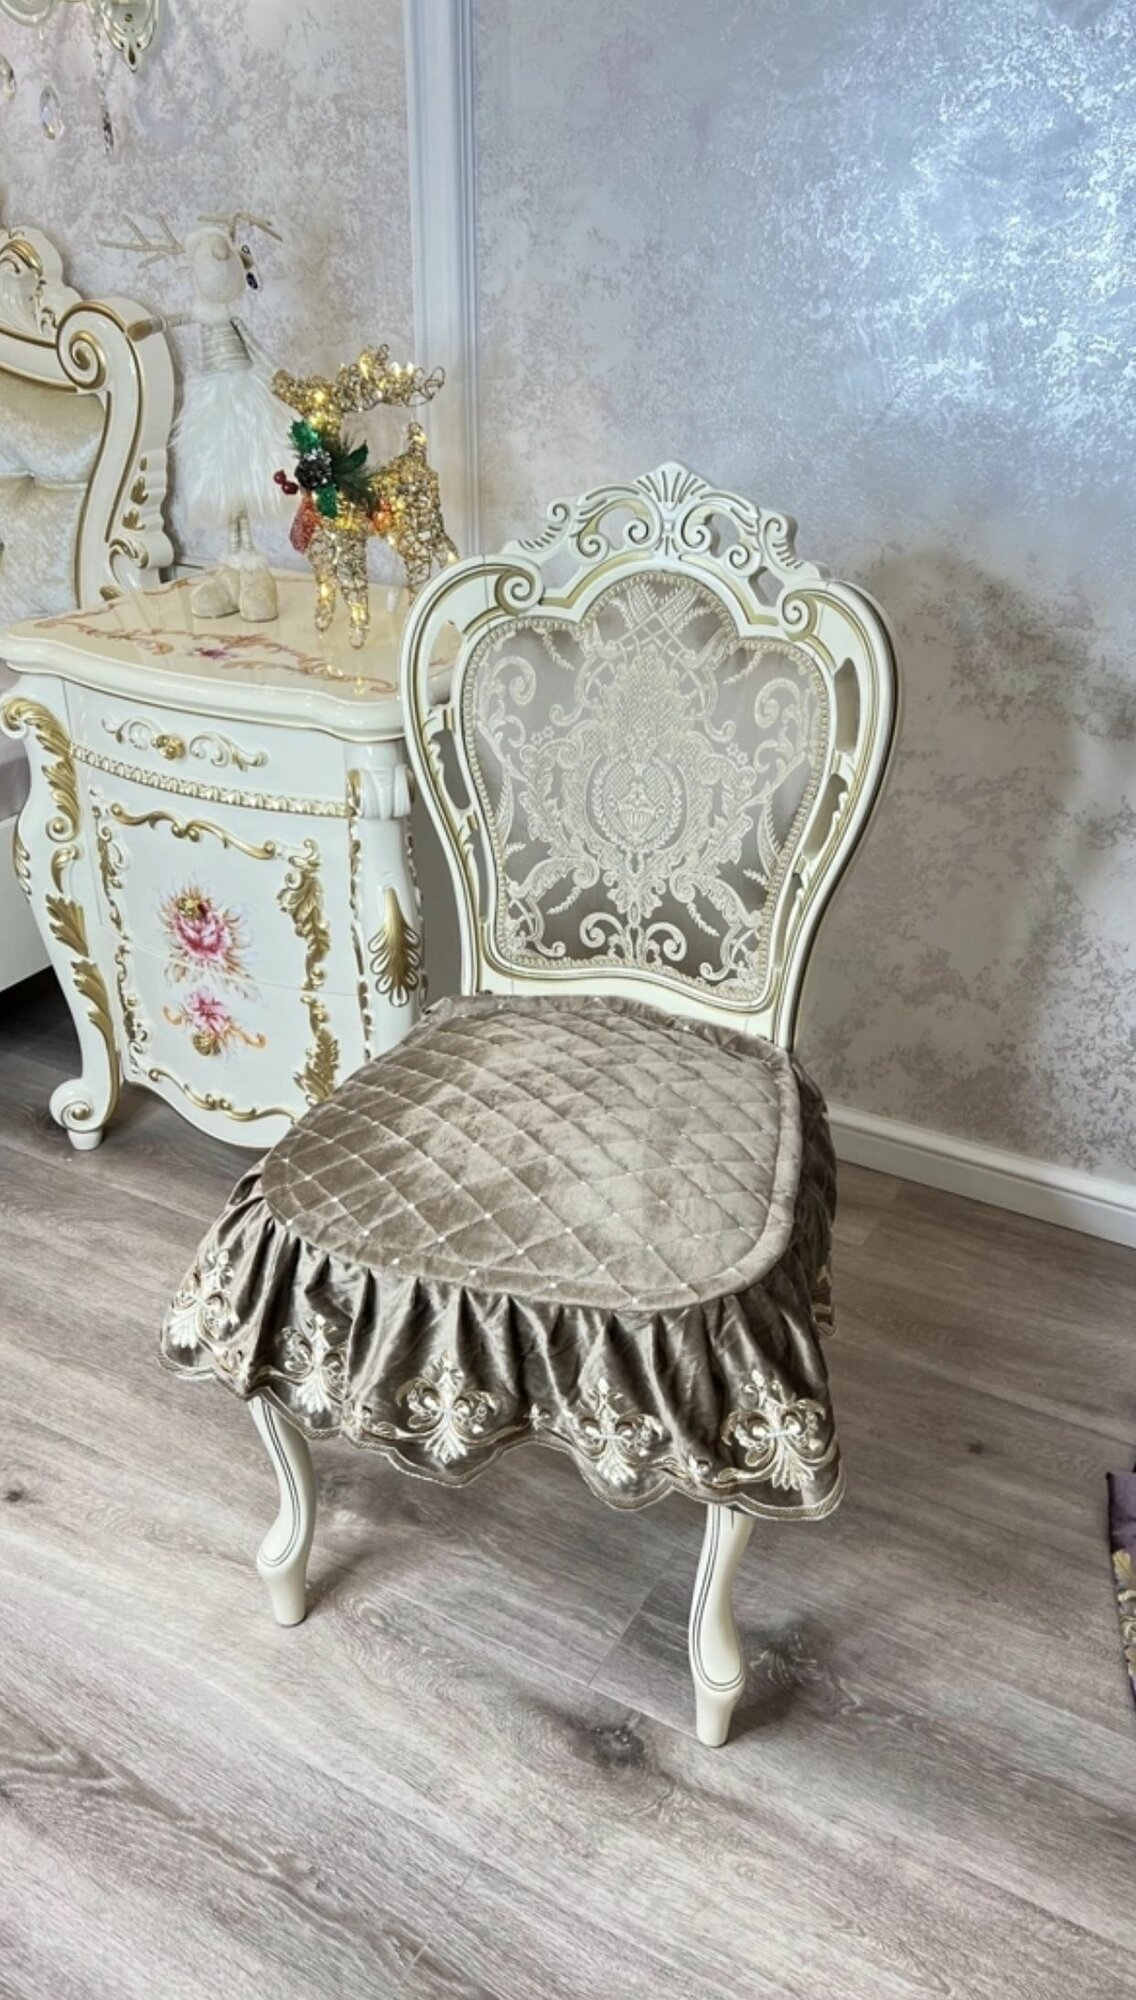 Накидка на стул с кружевами 45х55см+10см волан, сидушка на стул 45х55см +10см волан с прорезиненной основе с кружевным воланом